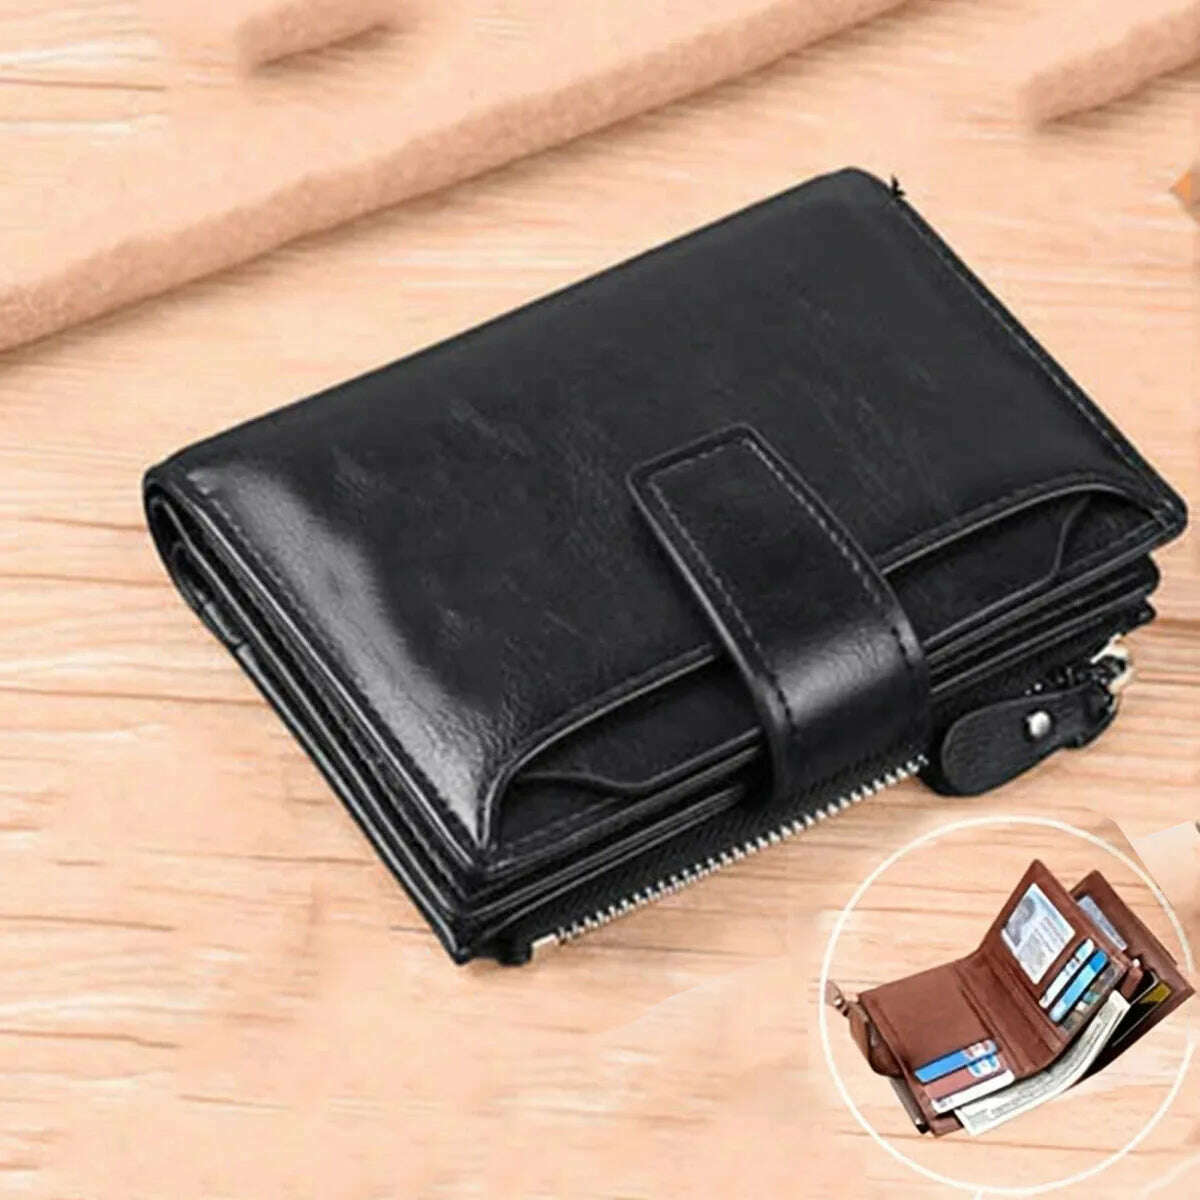 KIMLUD, Men's Coin Purse Wallet RFID Blocking Man PU Leather Wallet Zipper Business Card Holder Money Bag Wallet Male, No LOGO black, KIMLUD Women's Clothes